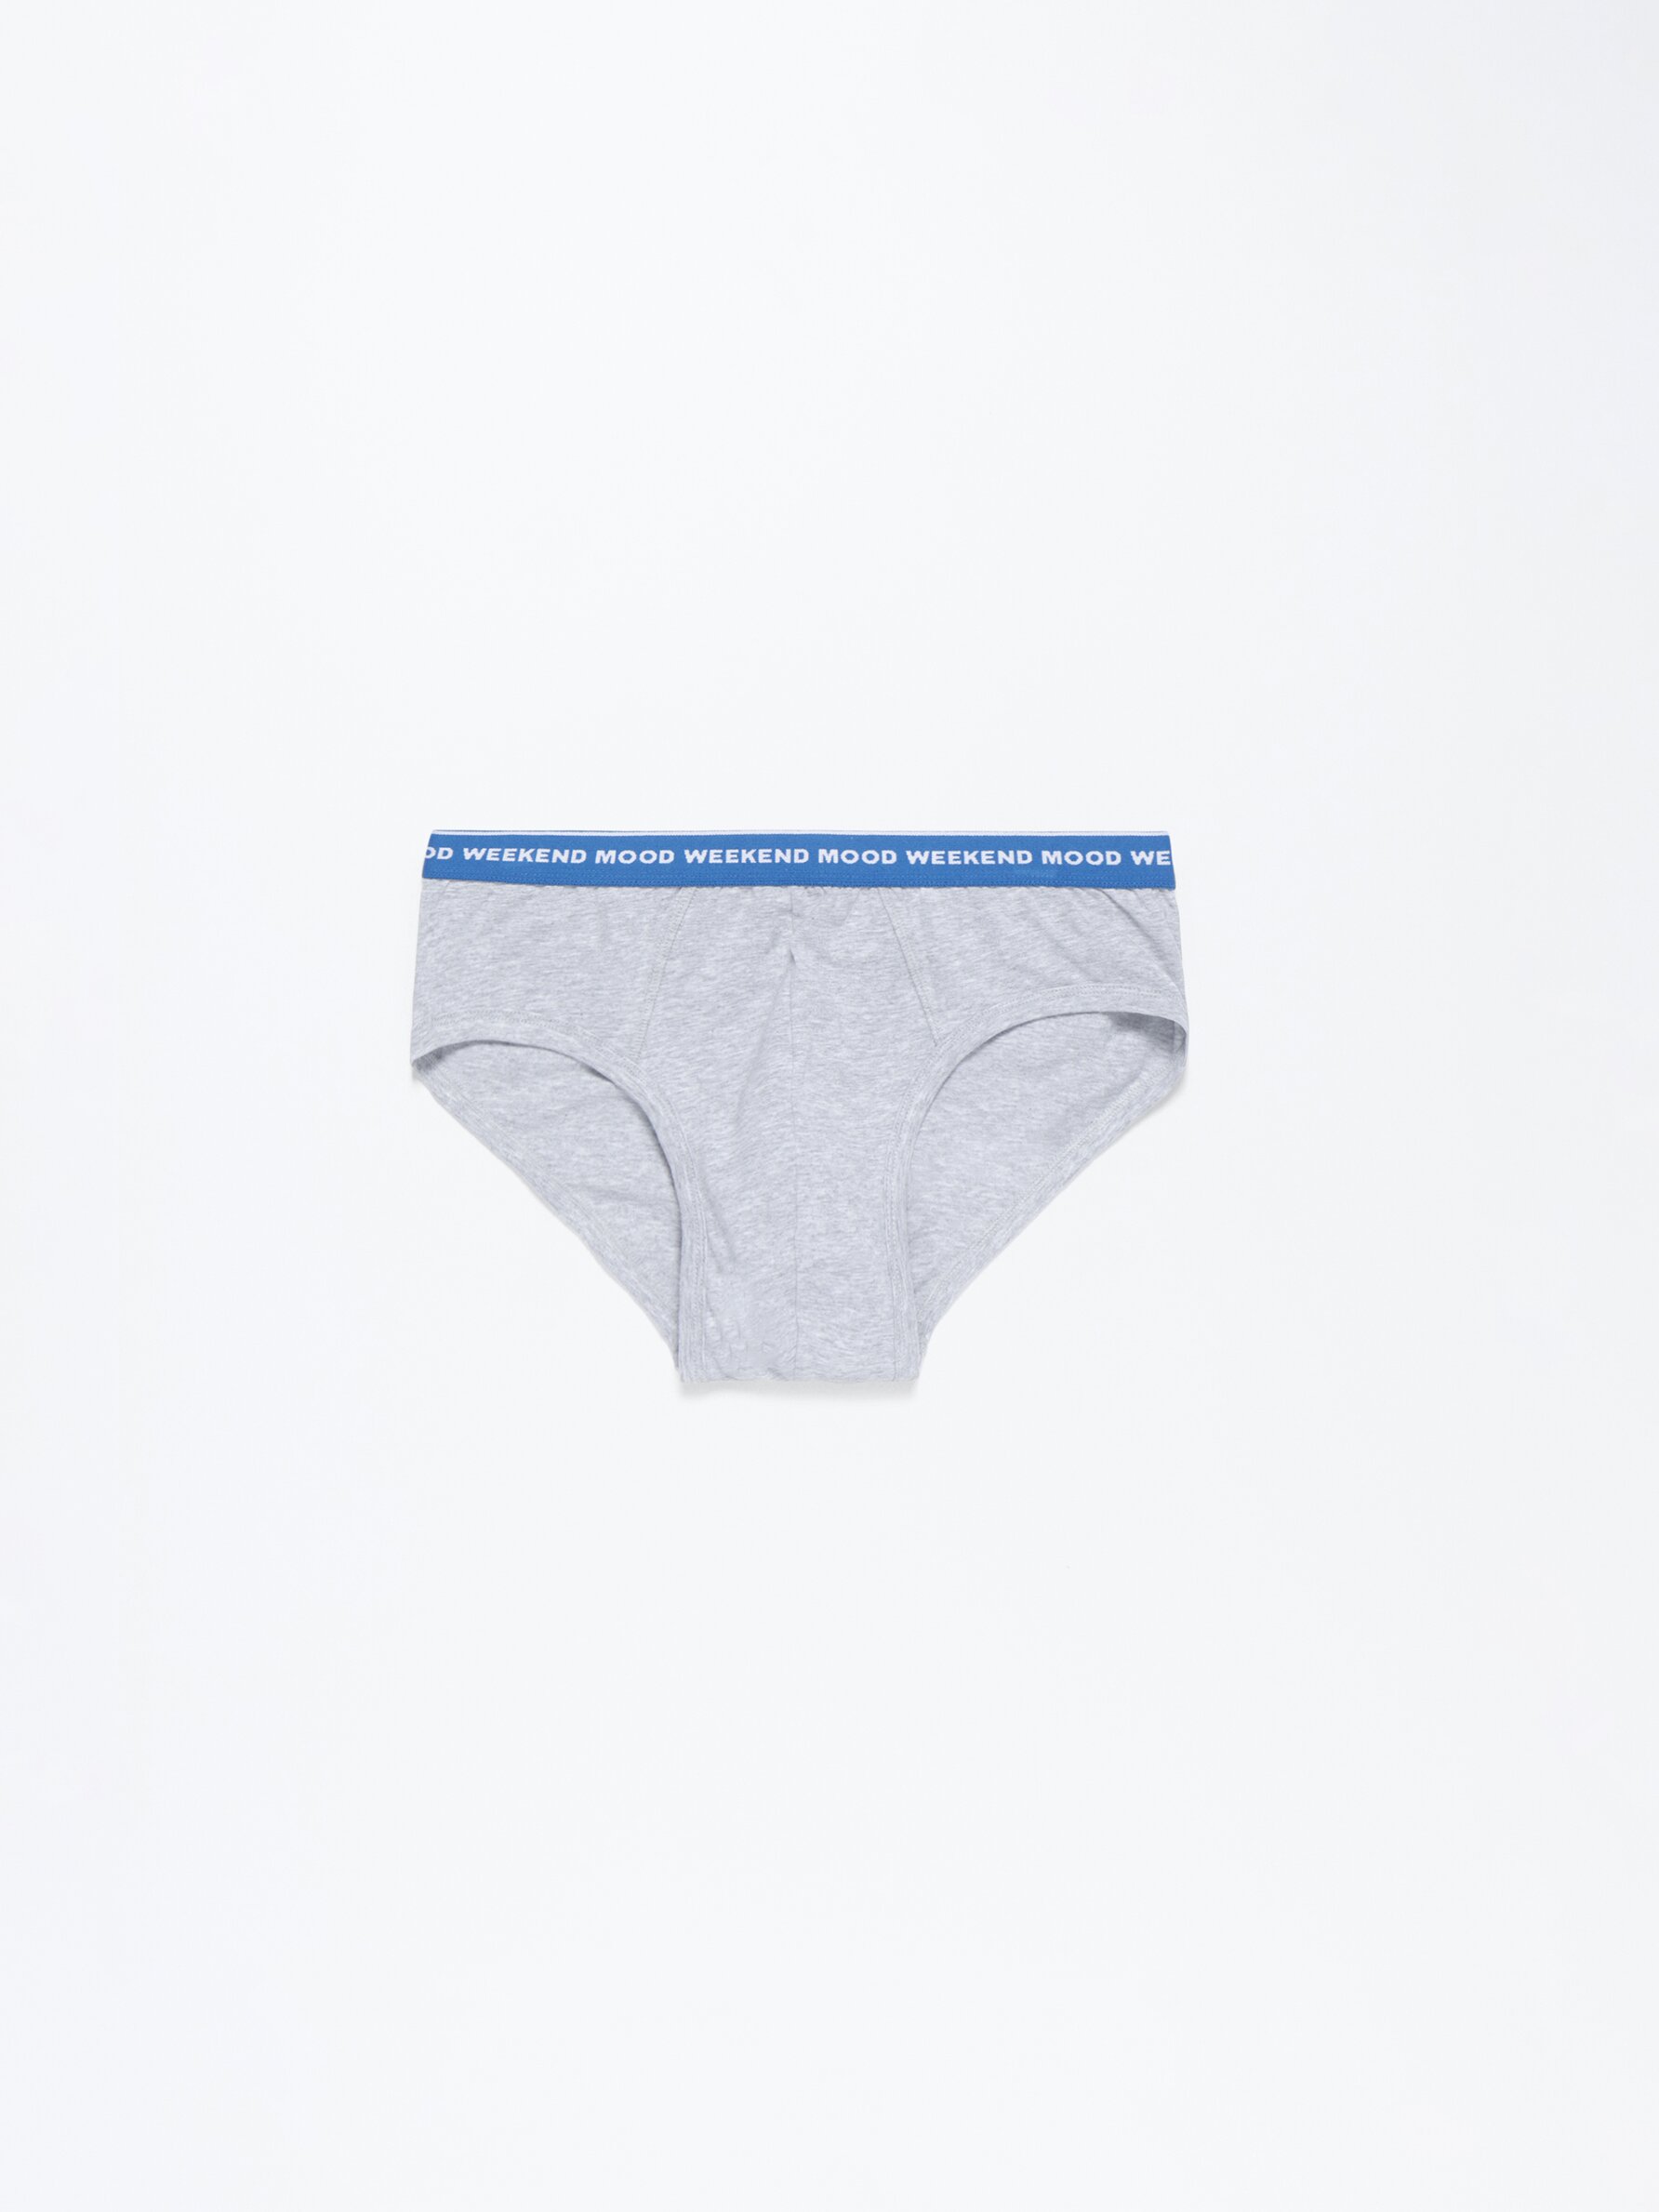 Underwear Panties Girls - United Colors Of Benetton - Spain, New